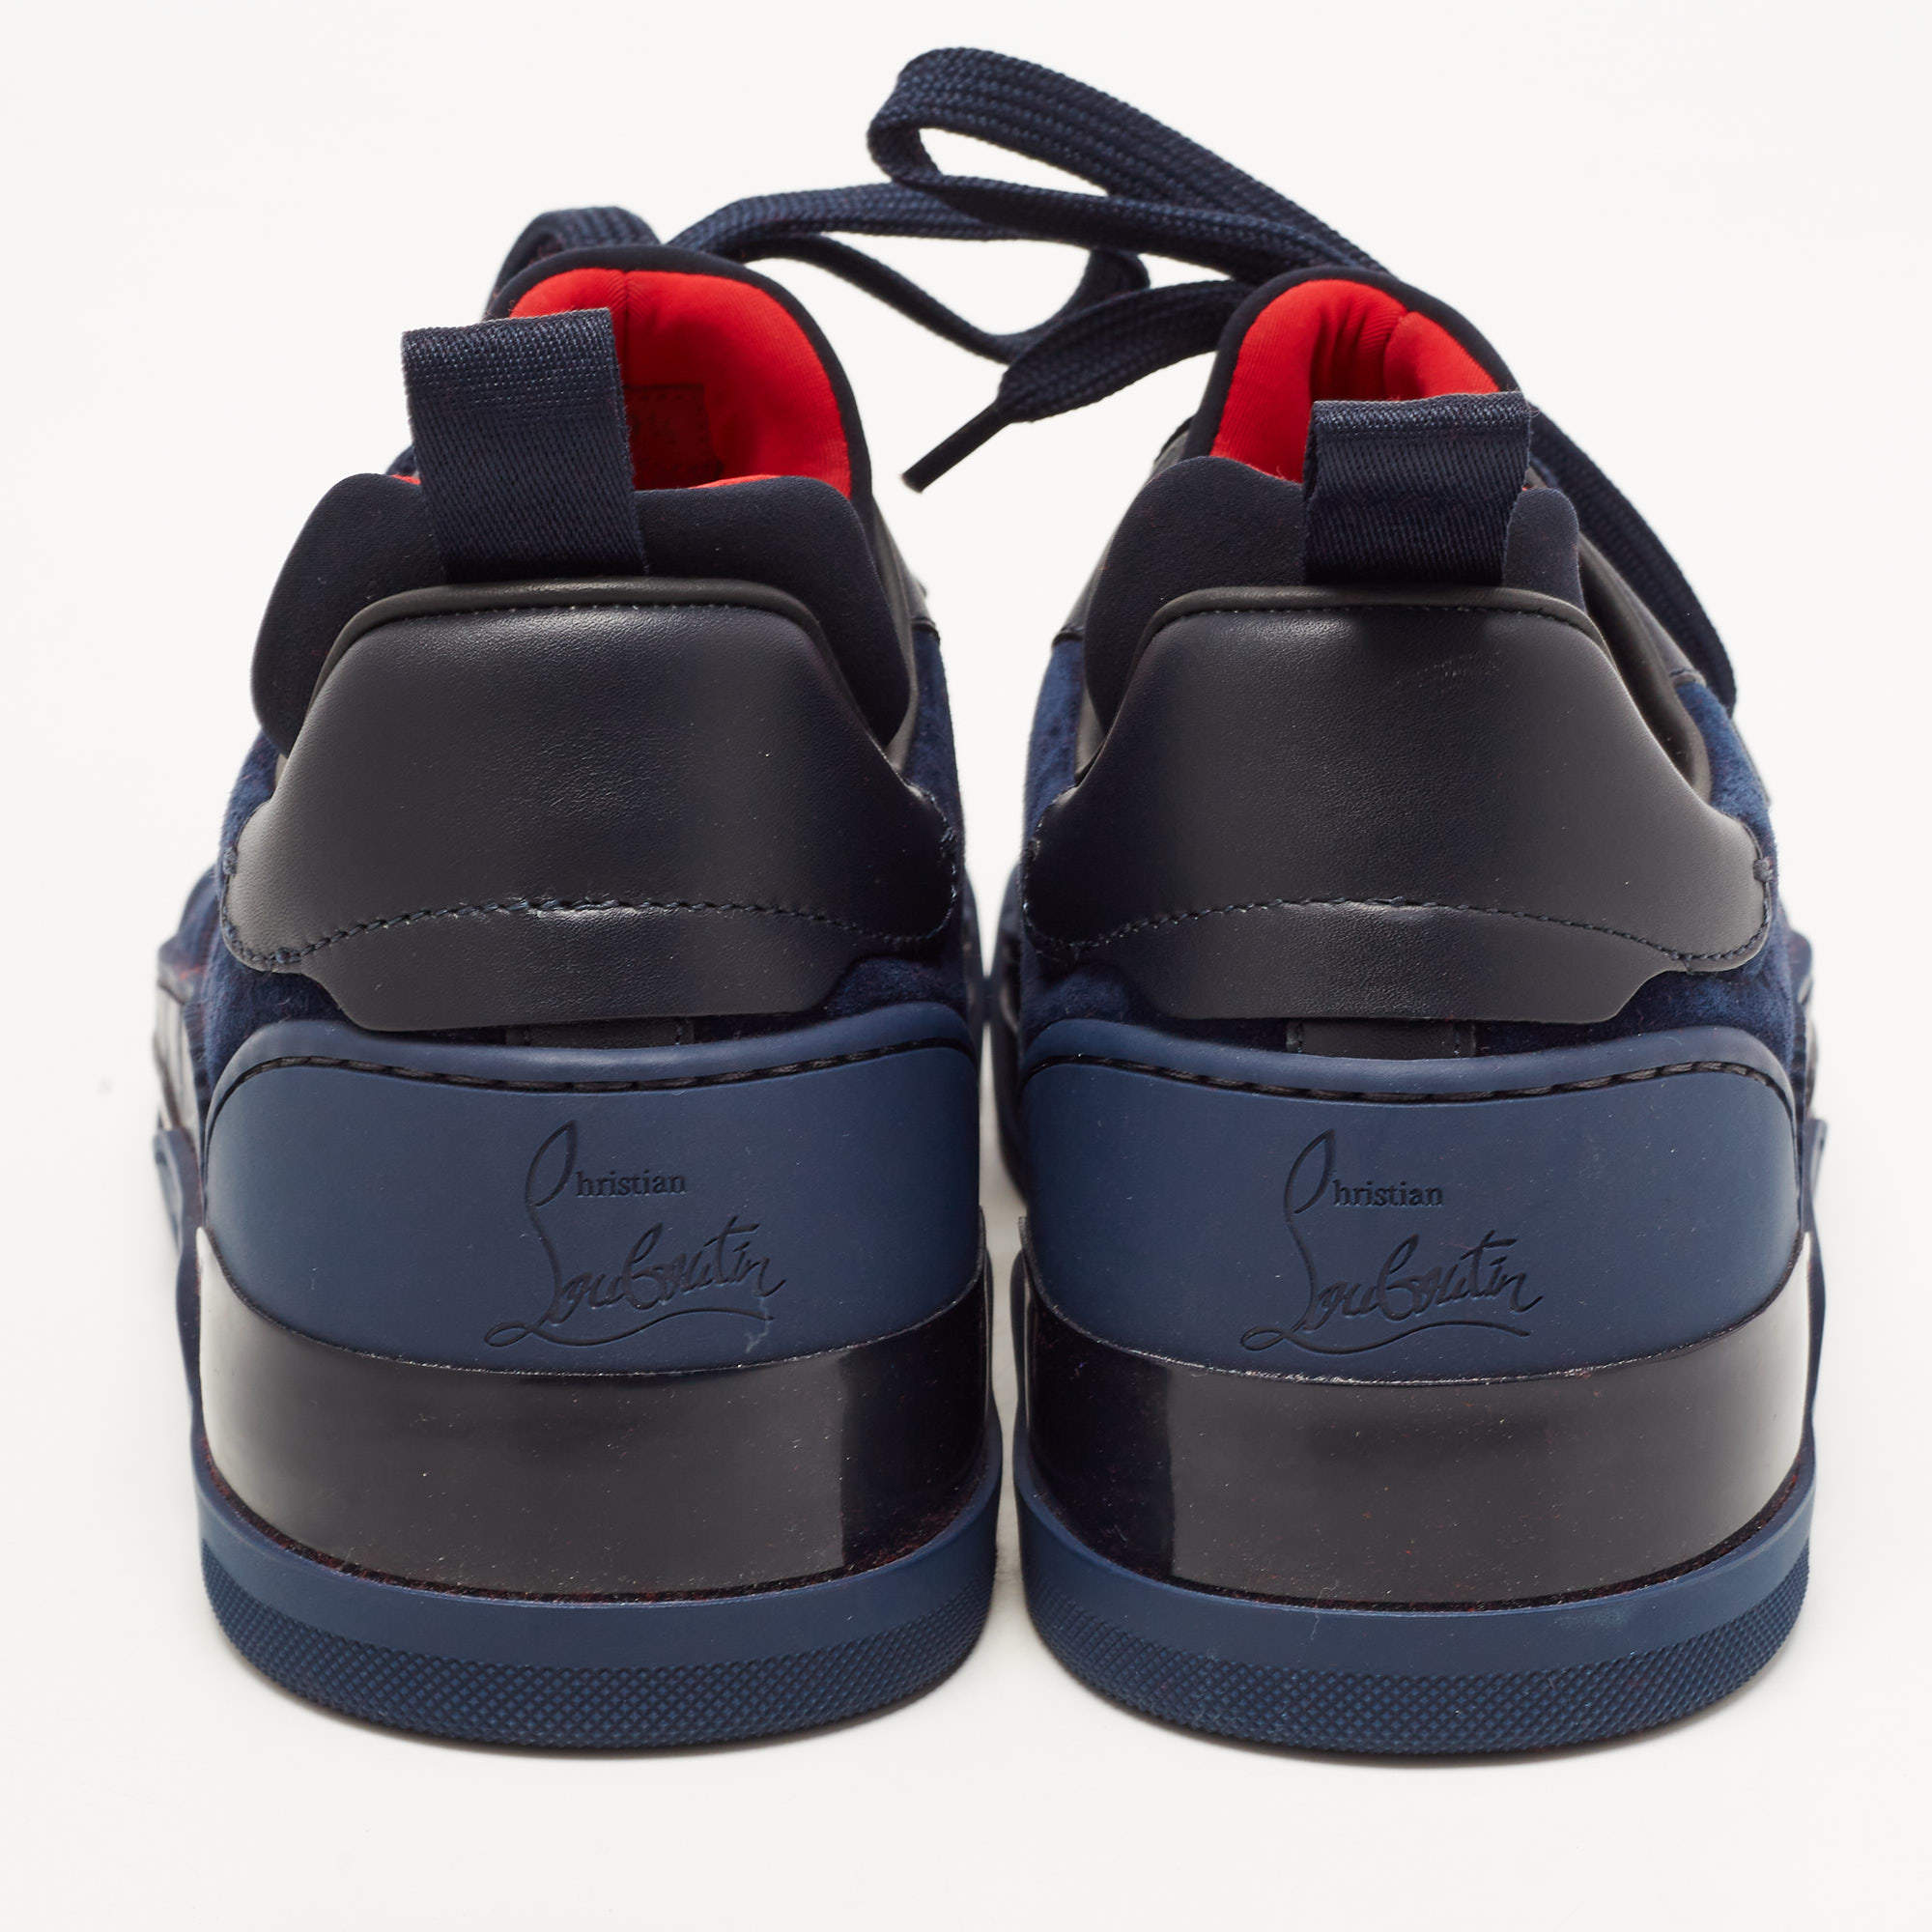 Christian Louboutin Men's Aurelien Sneakers Leather with Glitter Black  1765242